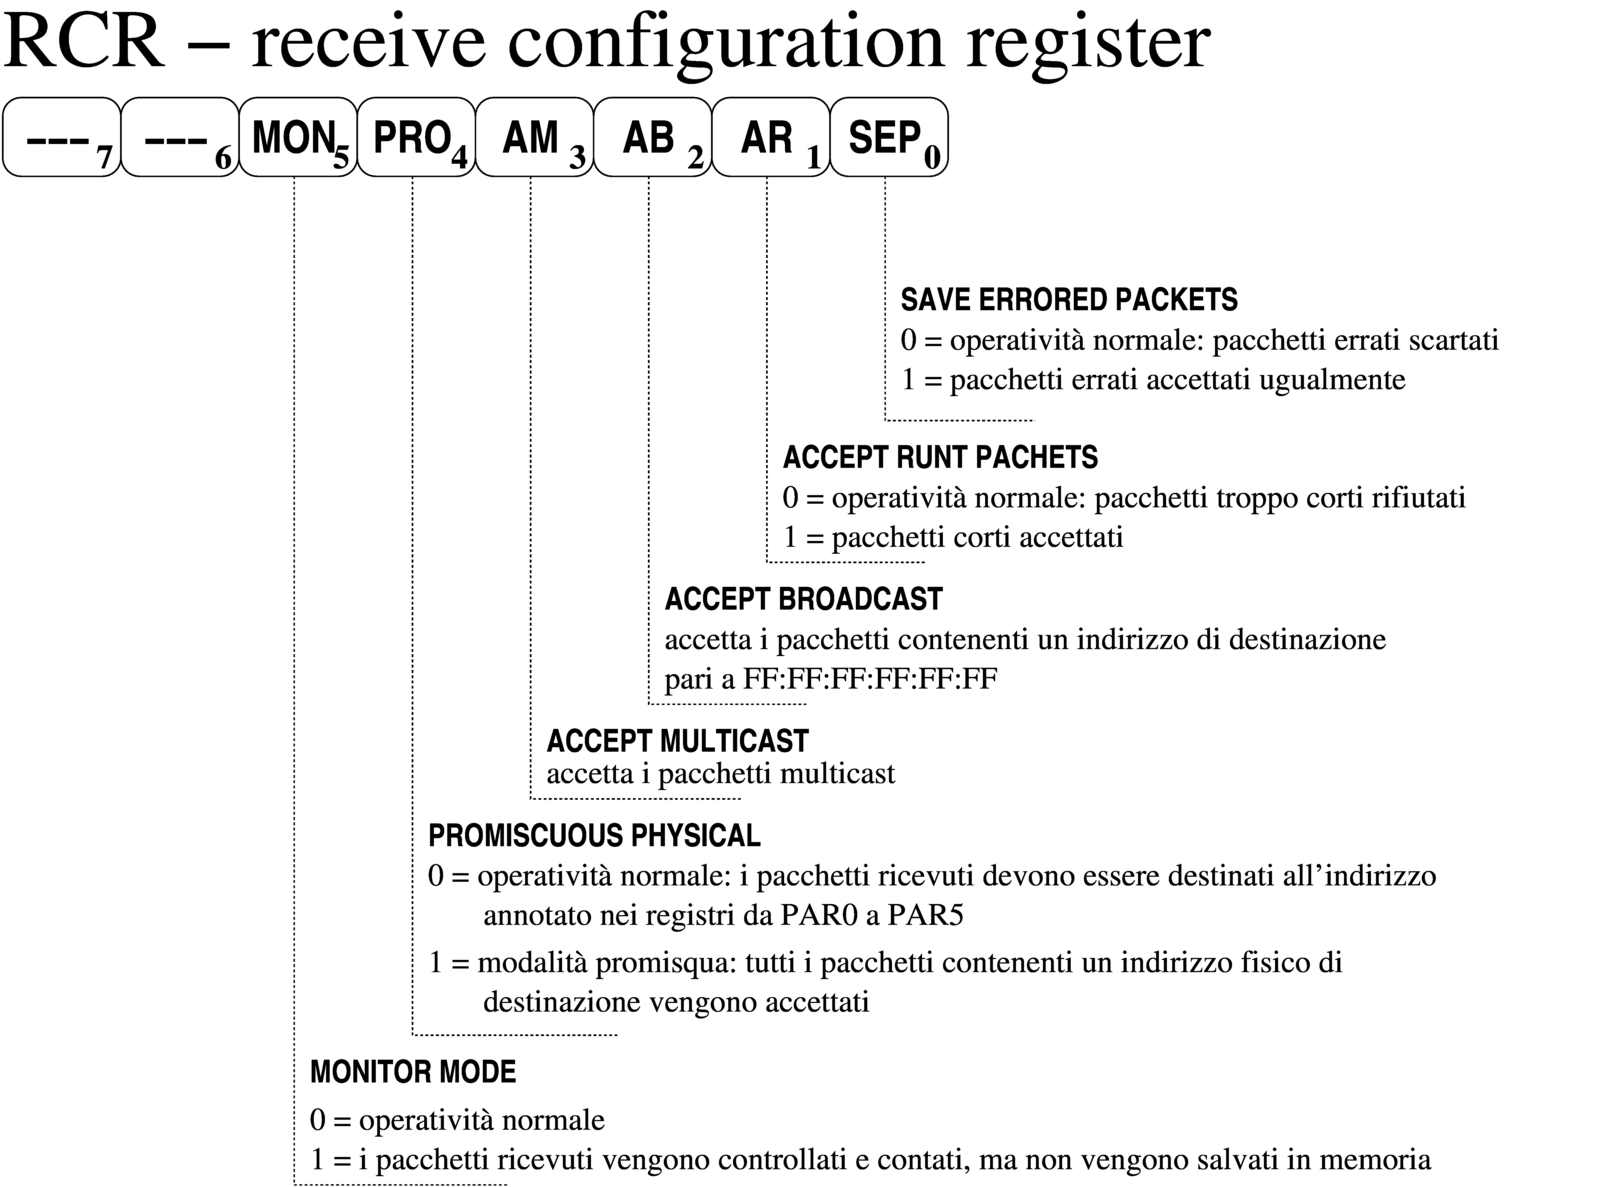 NE2000: rcr, receive configuration register